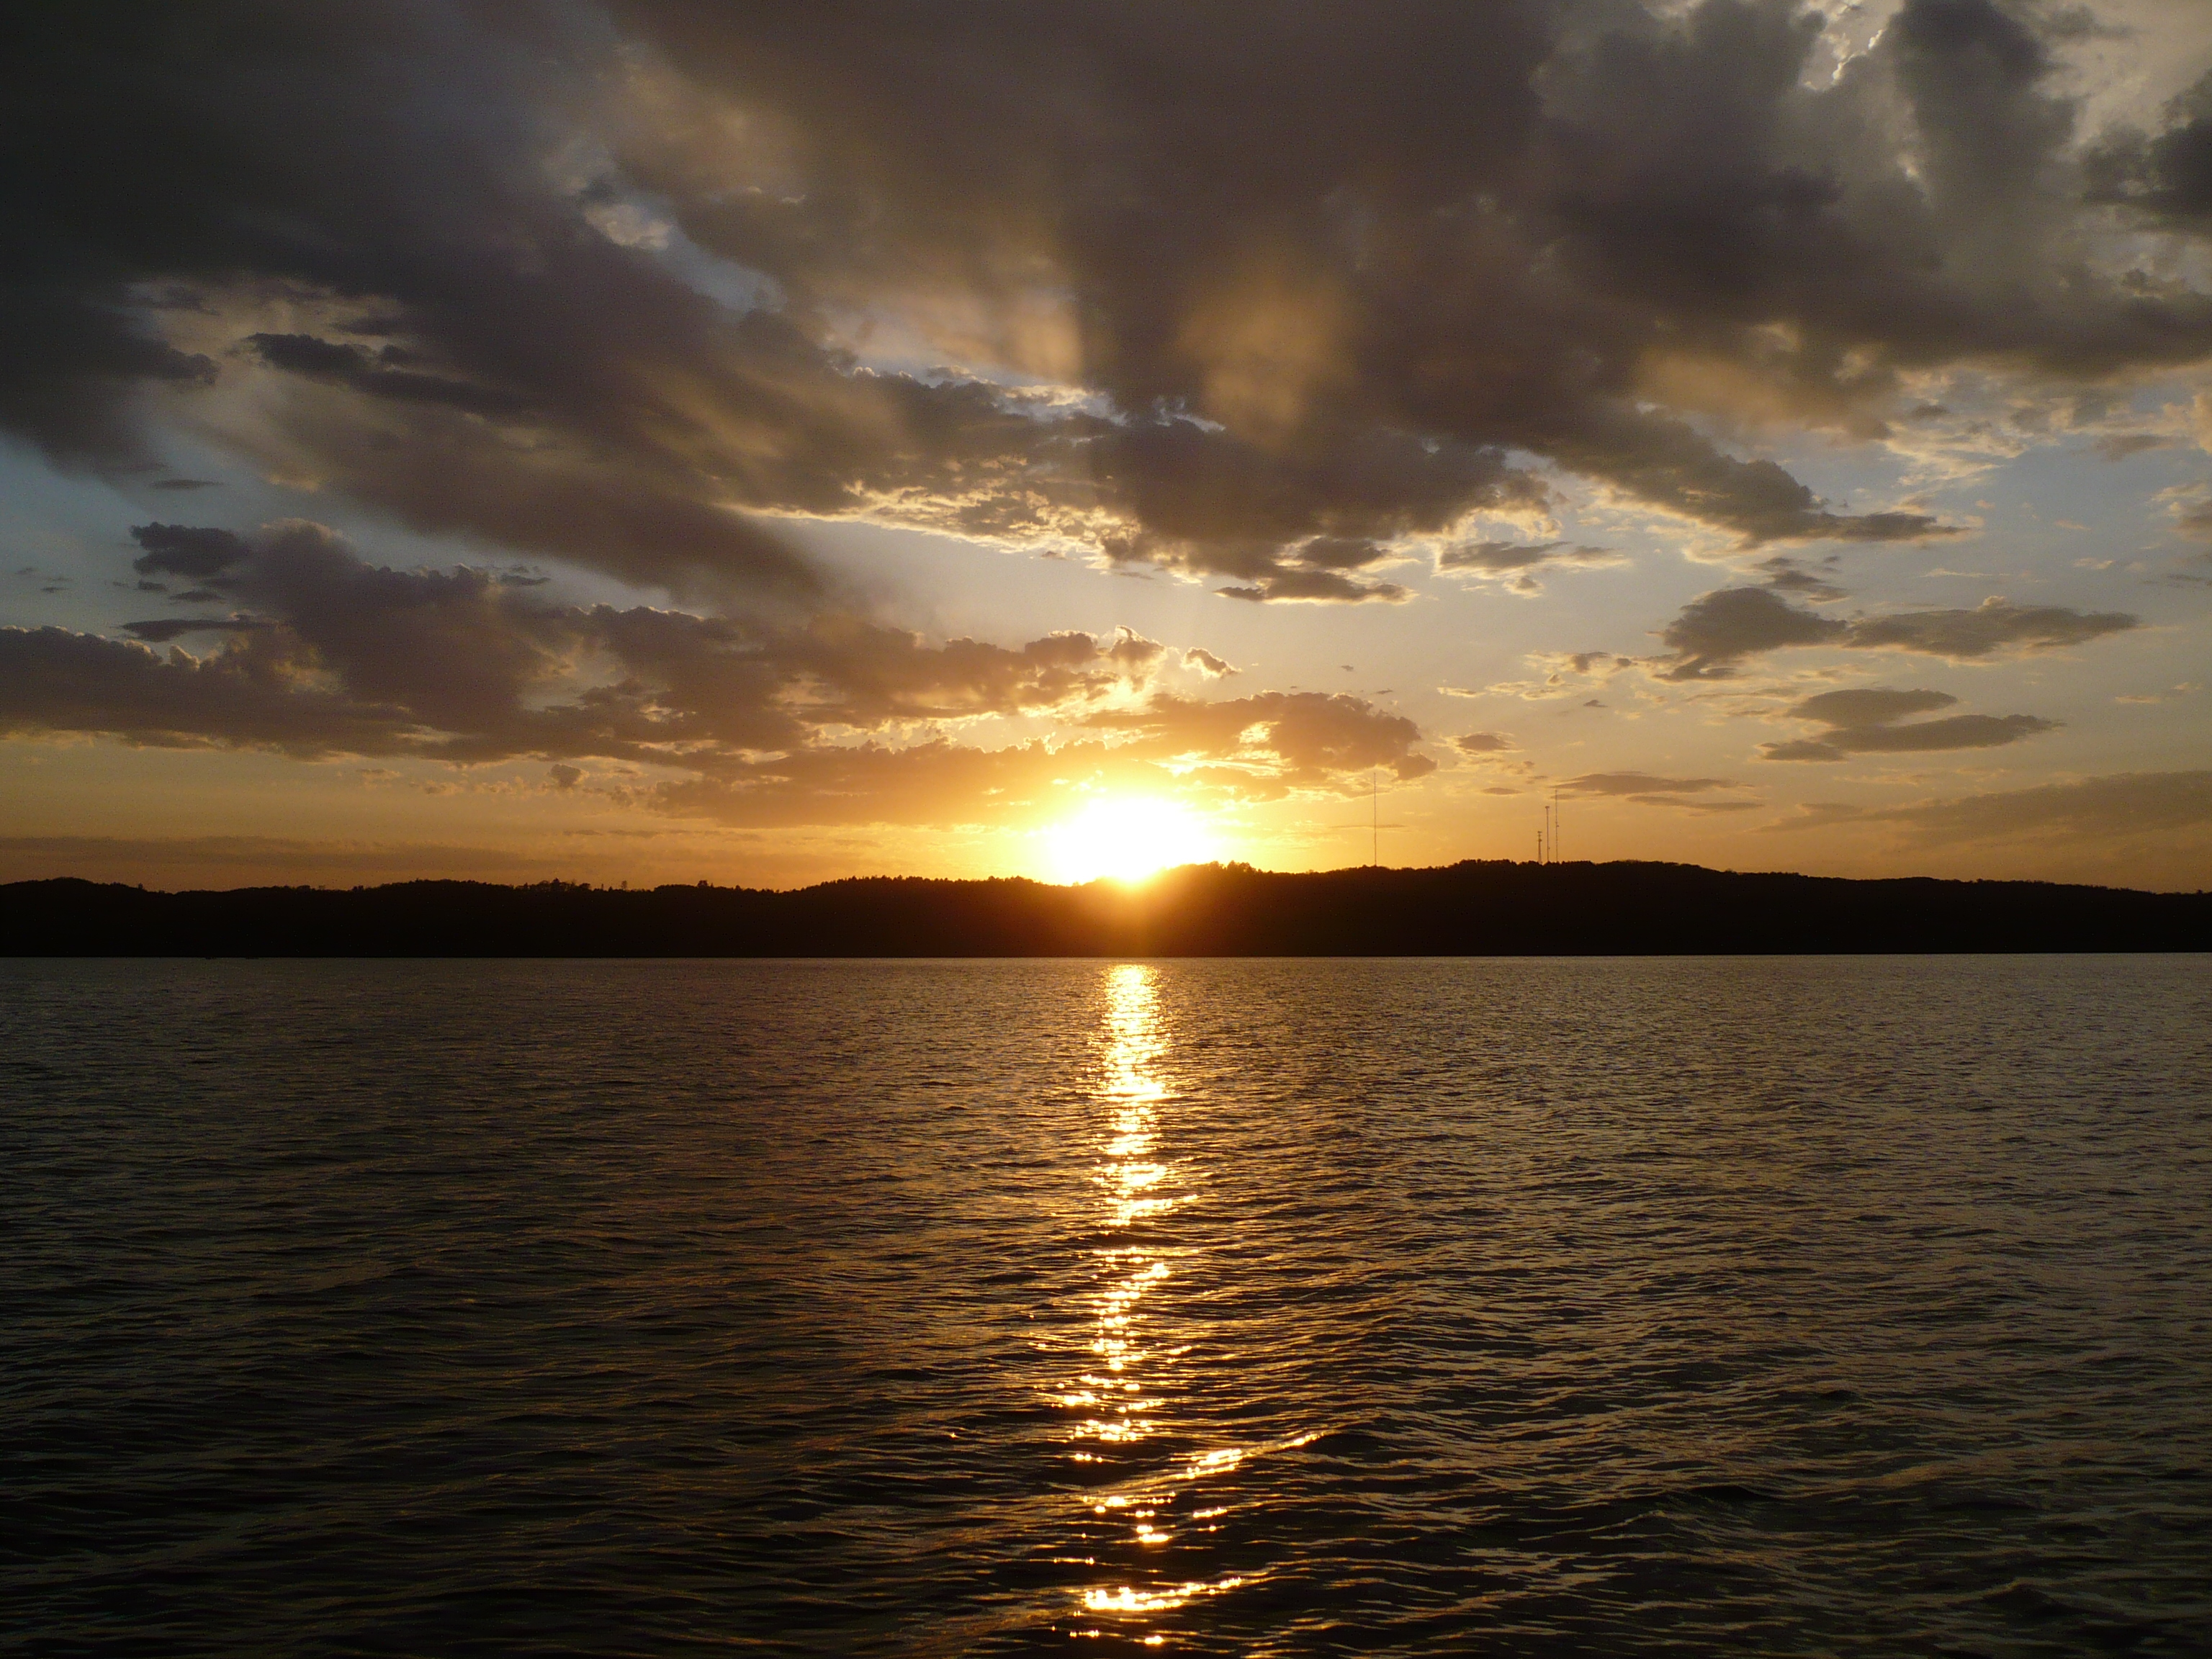 File:Gull Lake sunset.JPG - Wikimedia Commons